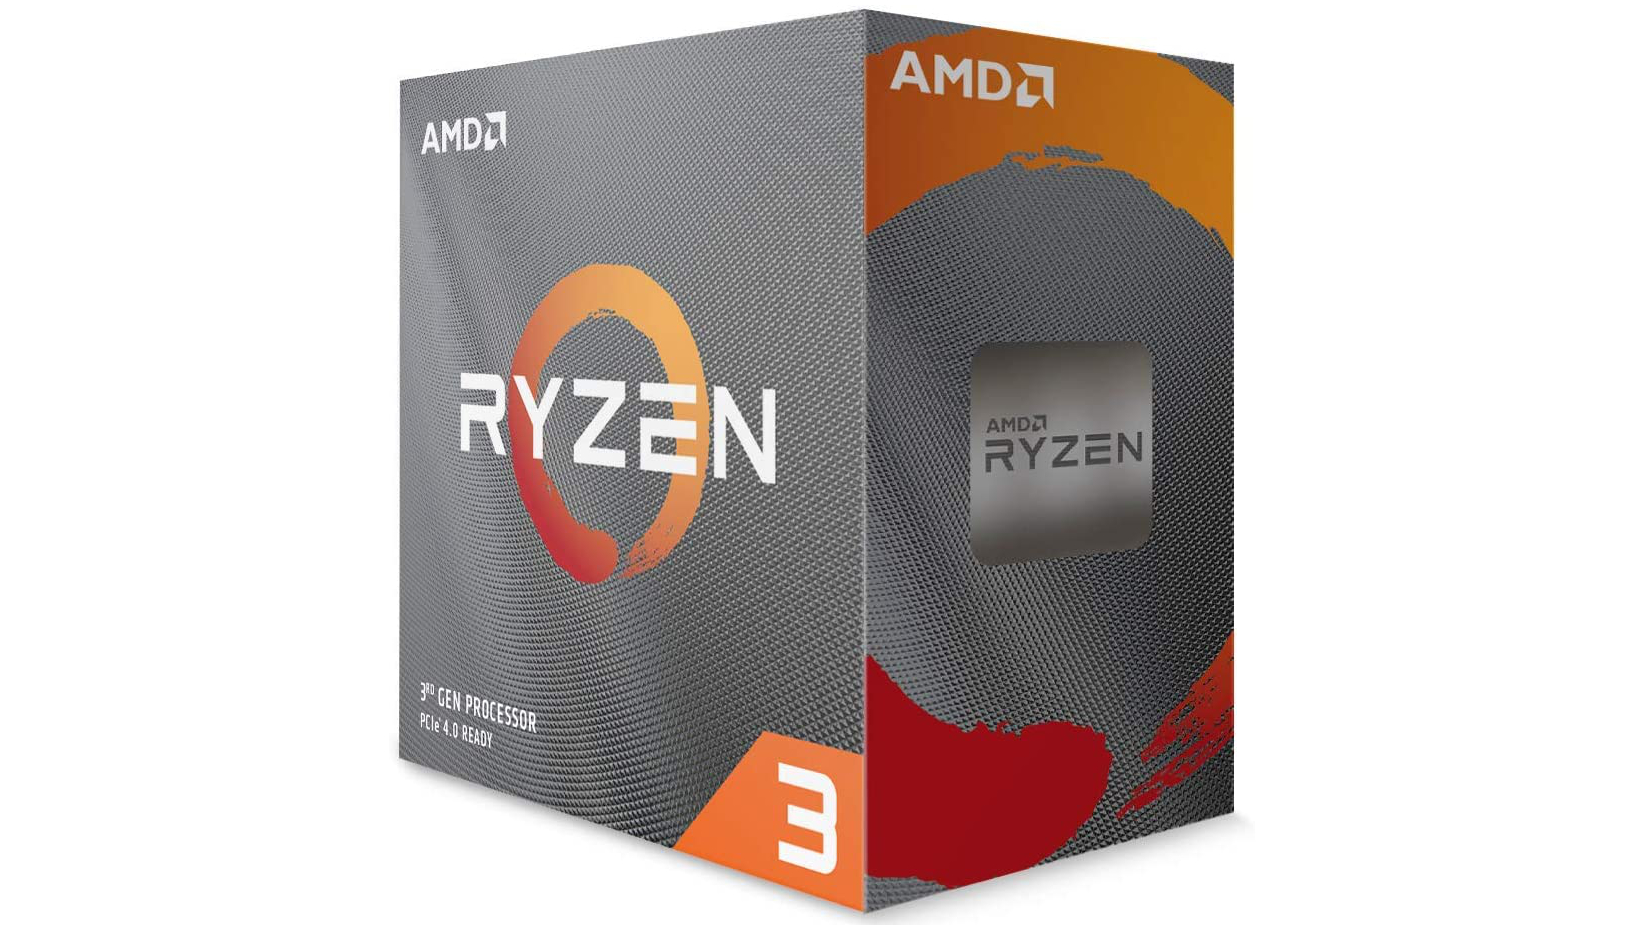 AMD Ryzen 3300X